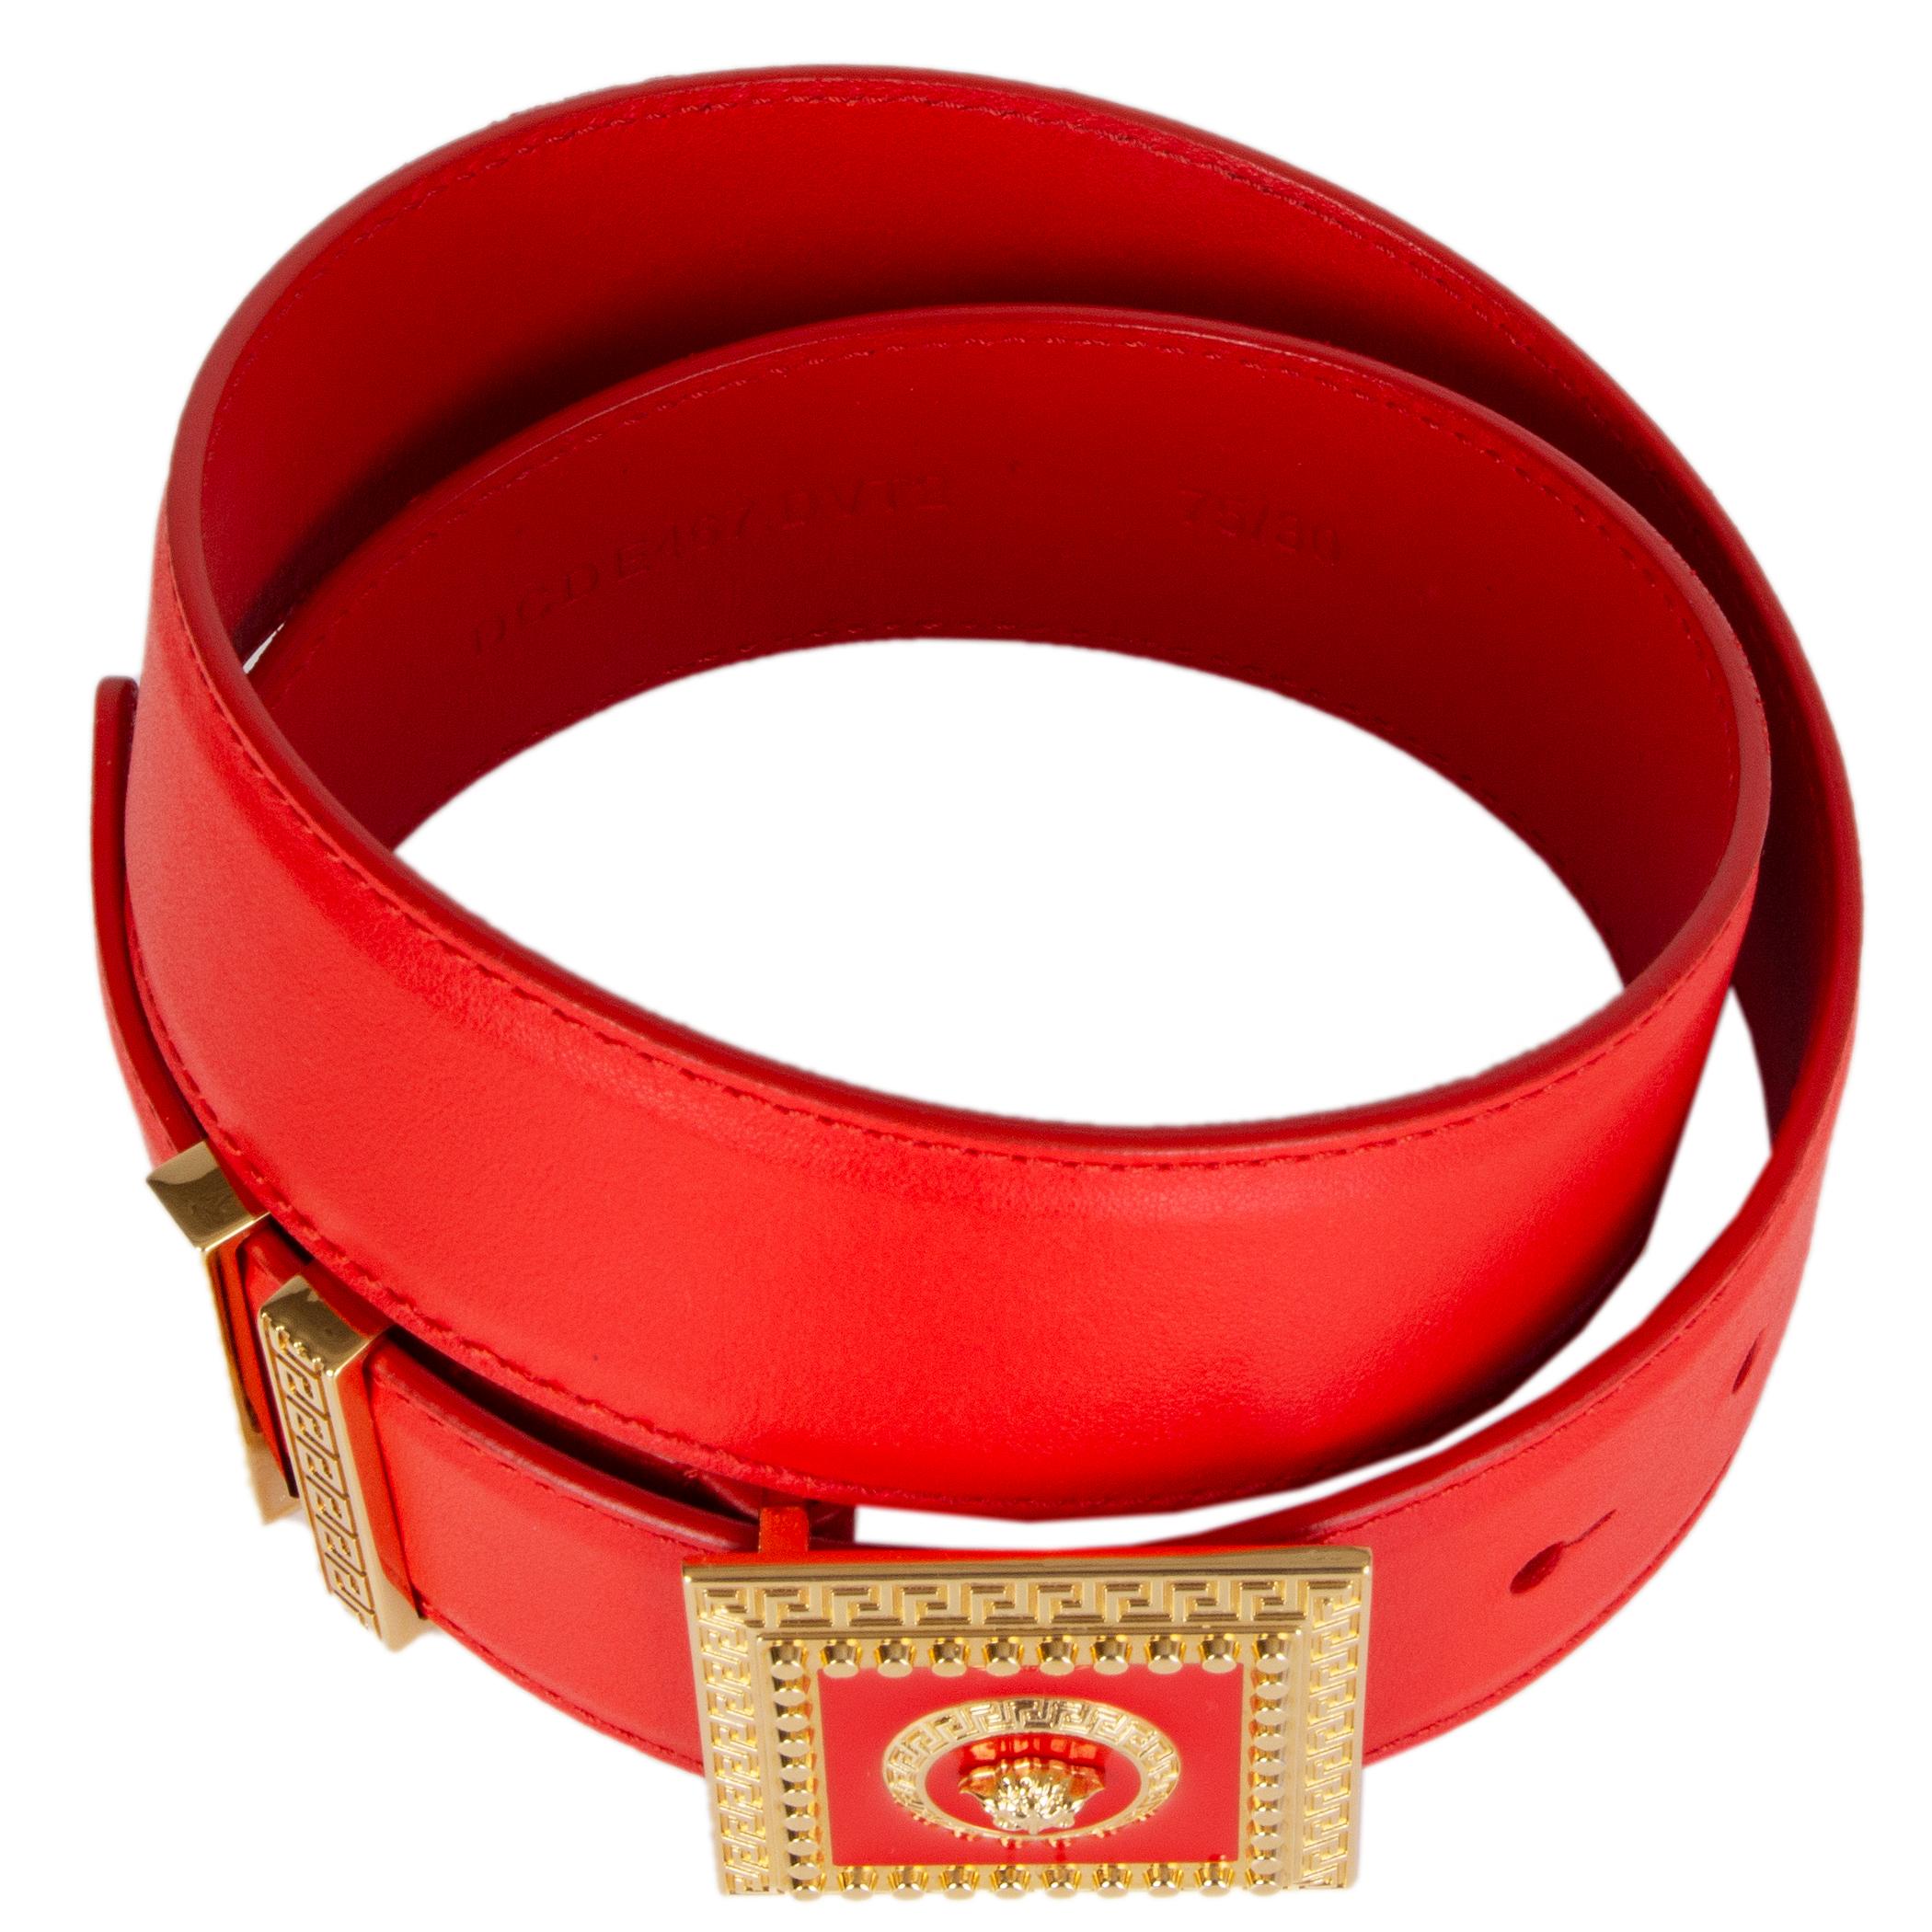 red versace belt gold buckle